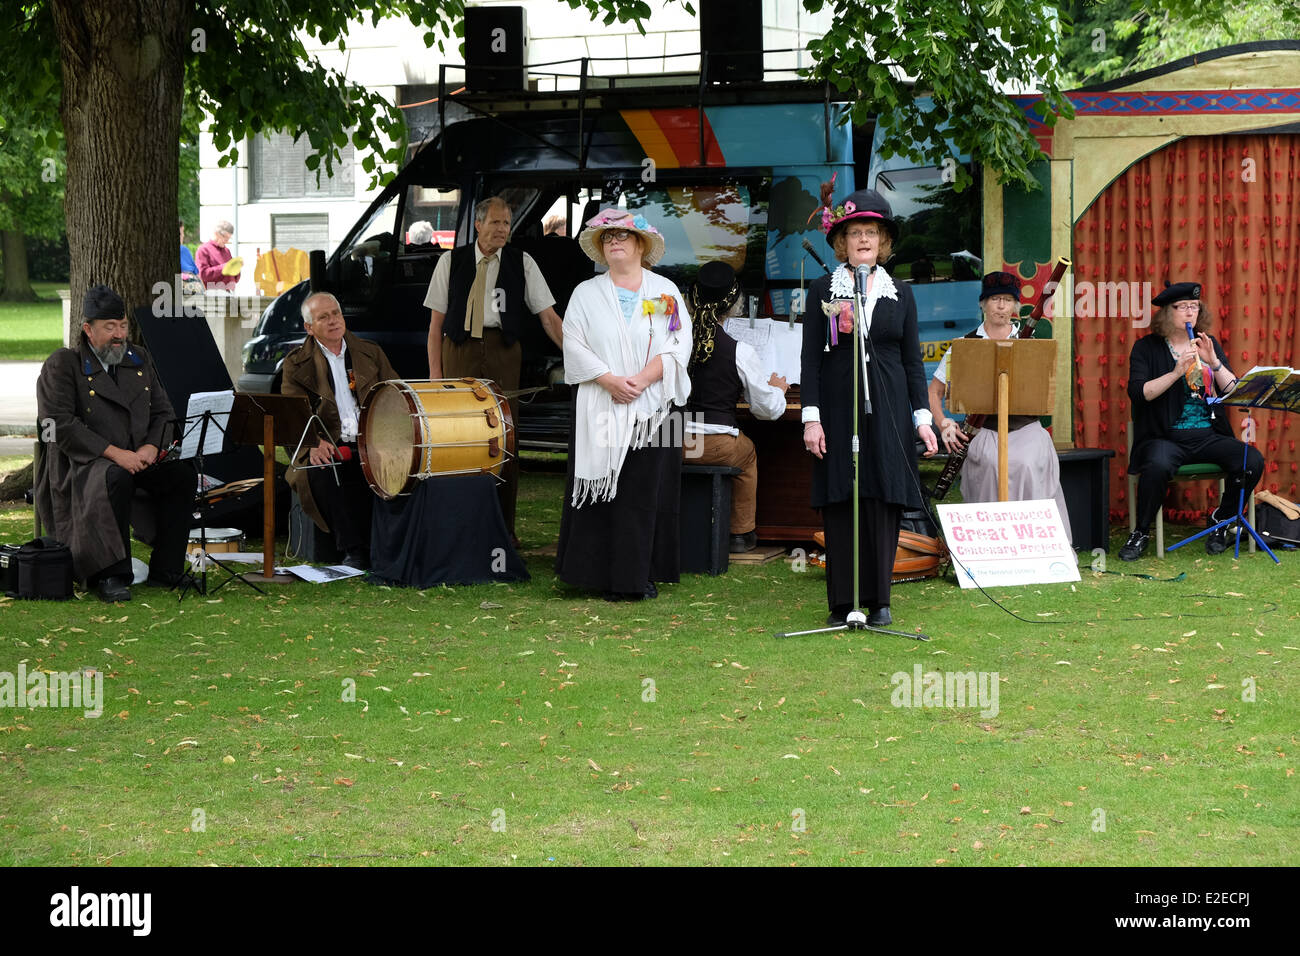 Sängerinnen und Sänger aus Charnwood großen Krieg centenary Project bei Picknick im Park loughborough Stockfoto